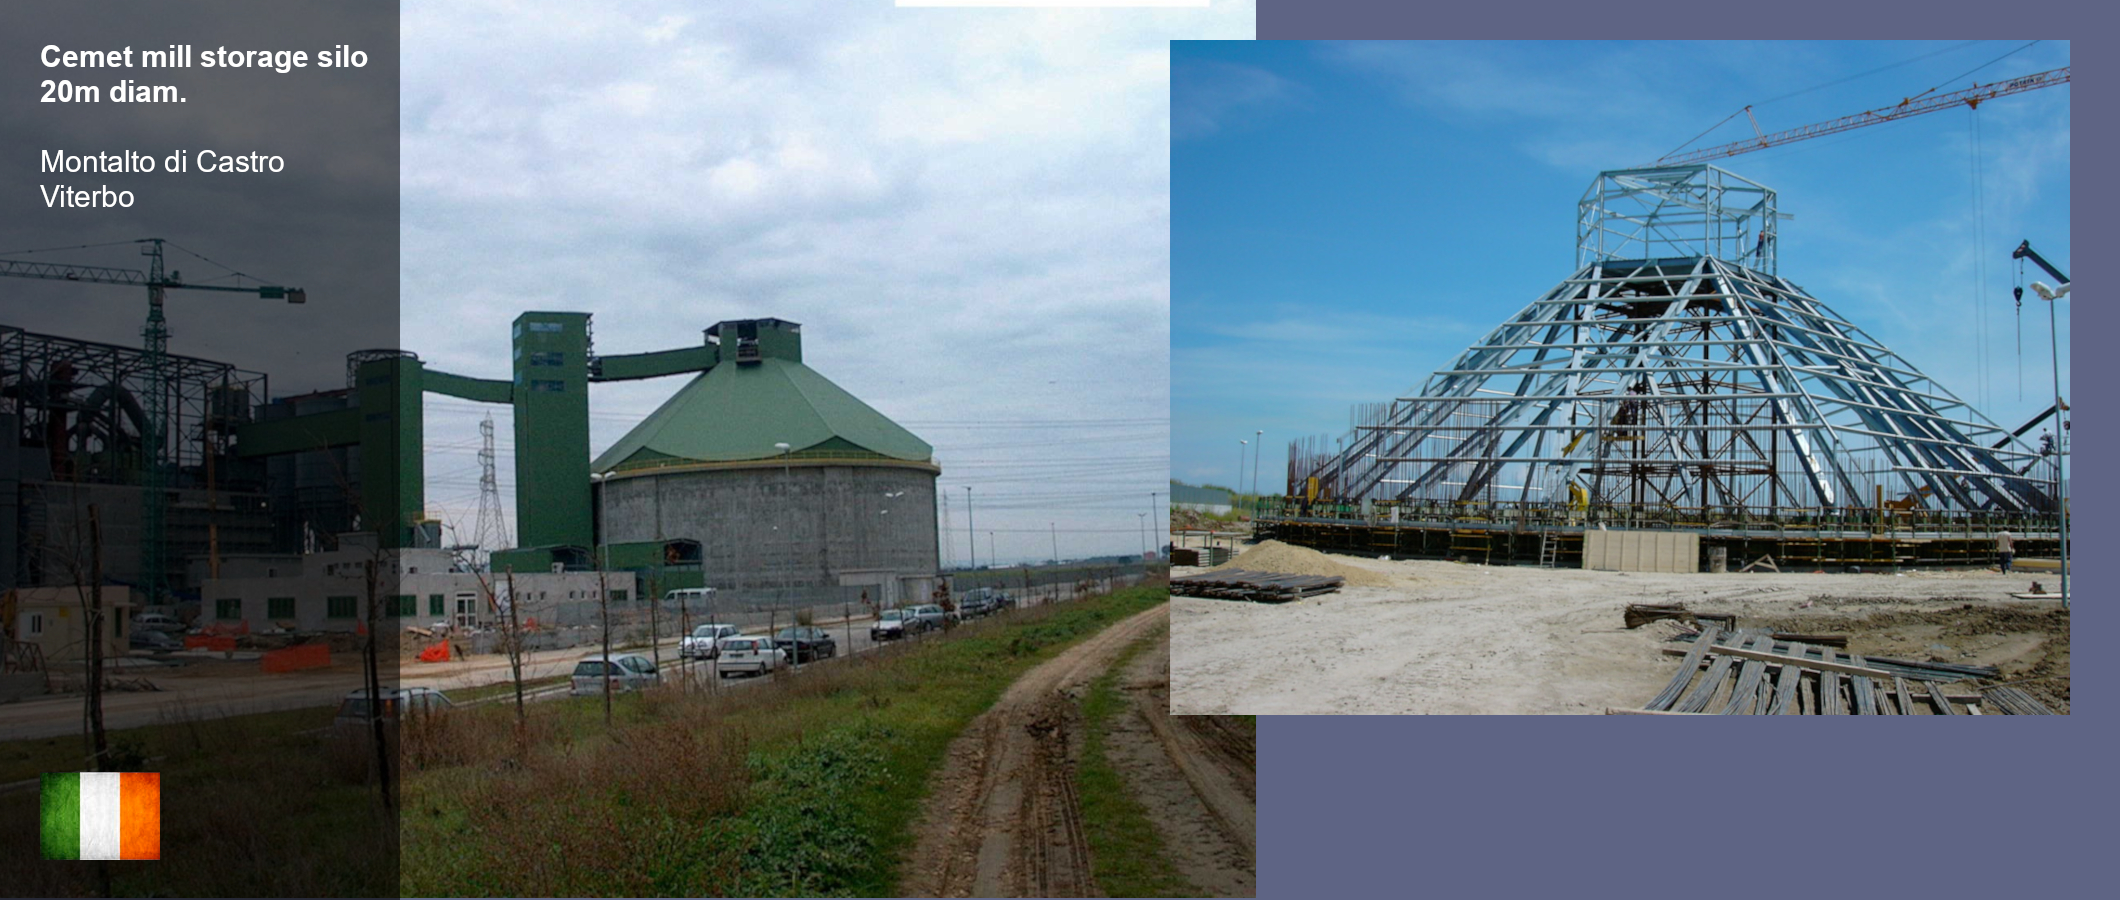 Cement mill storage silo 20 m diam